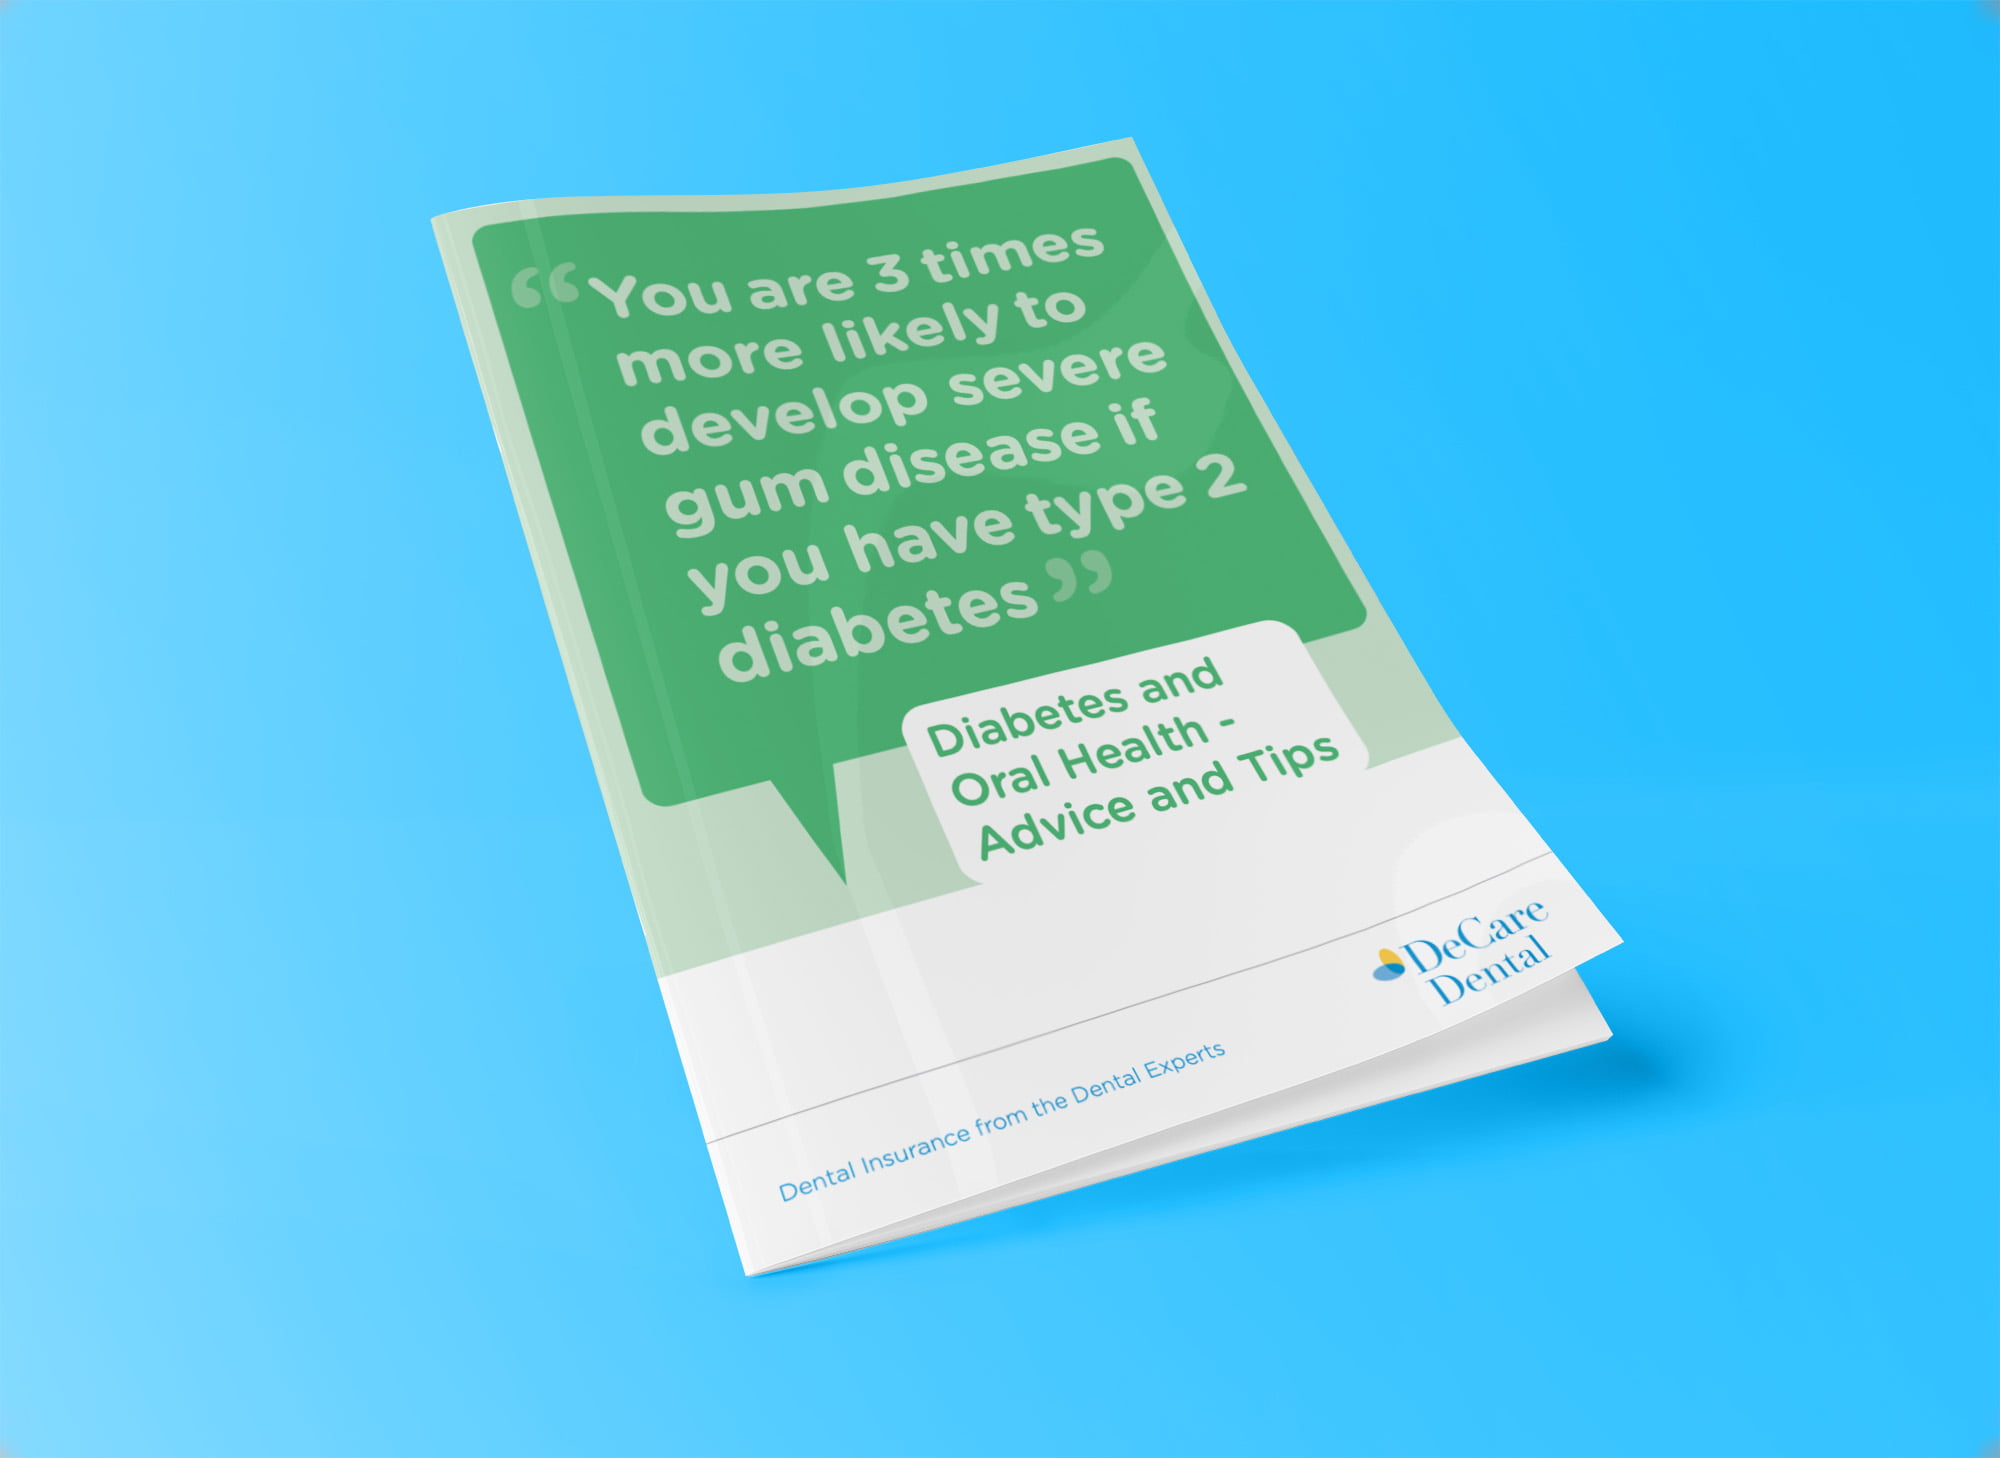 diabetes and oral health brochure